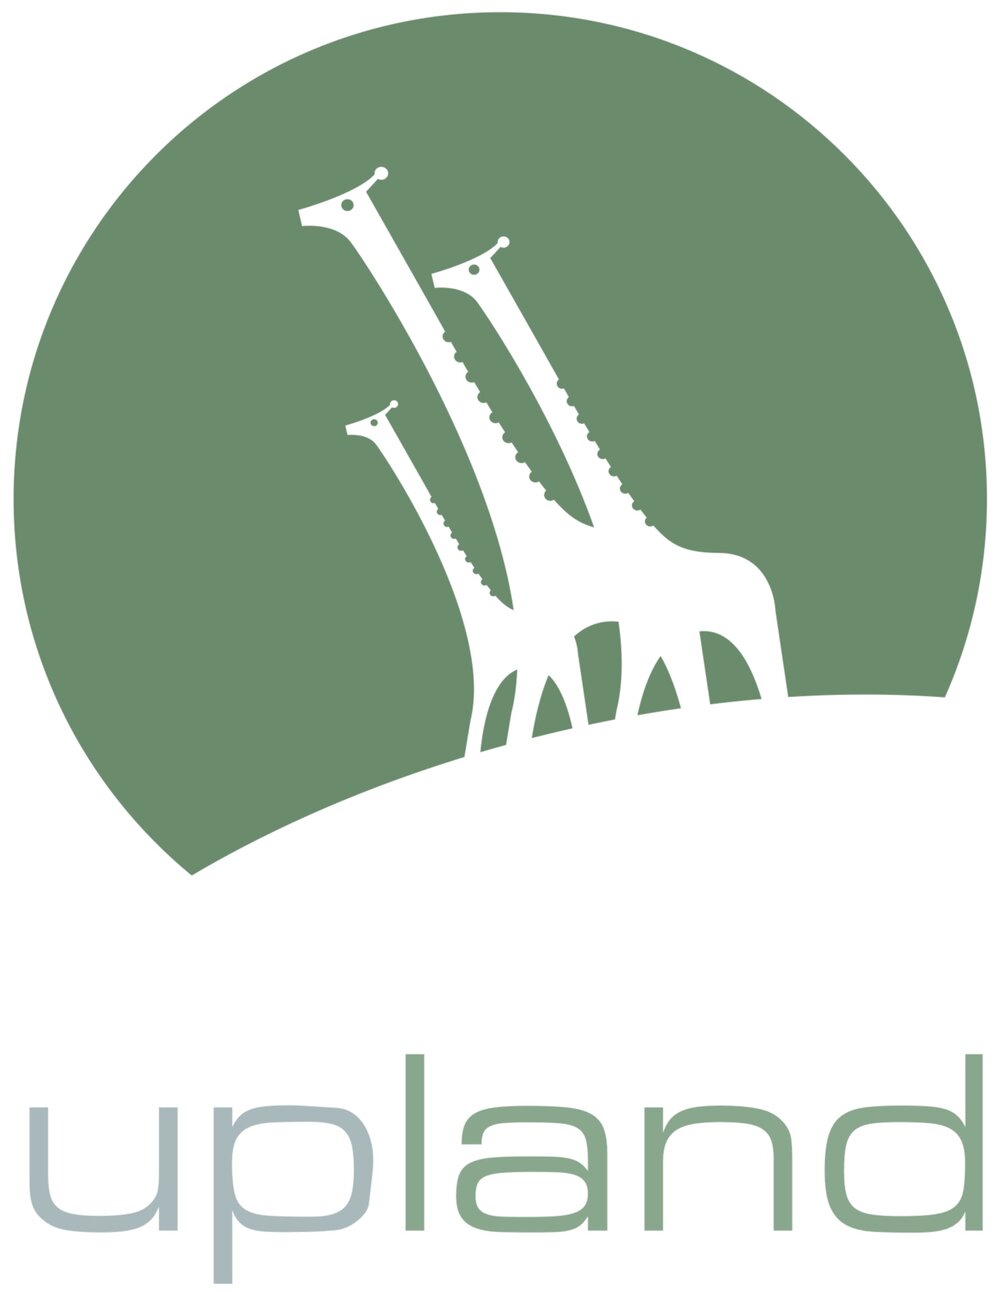 upland sound